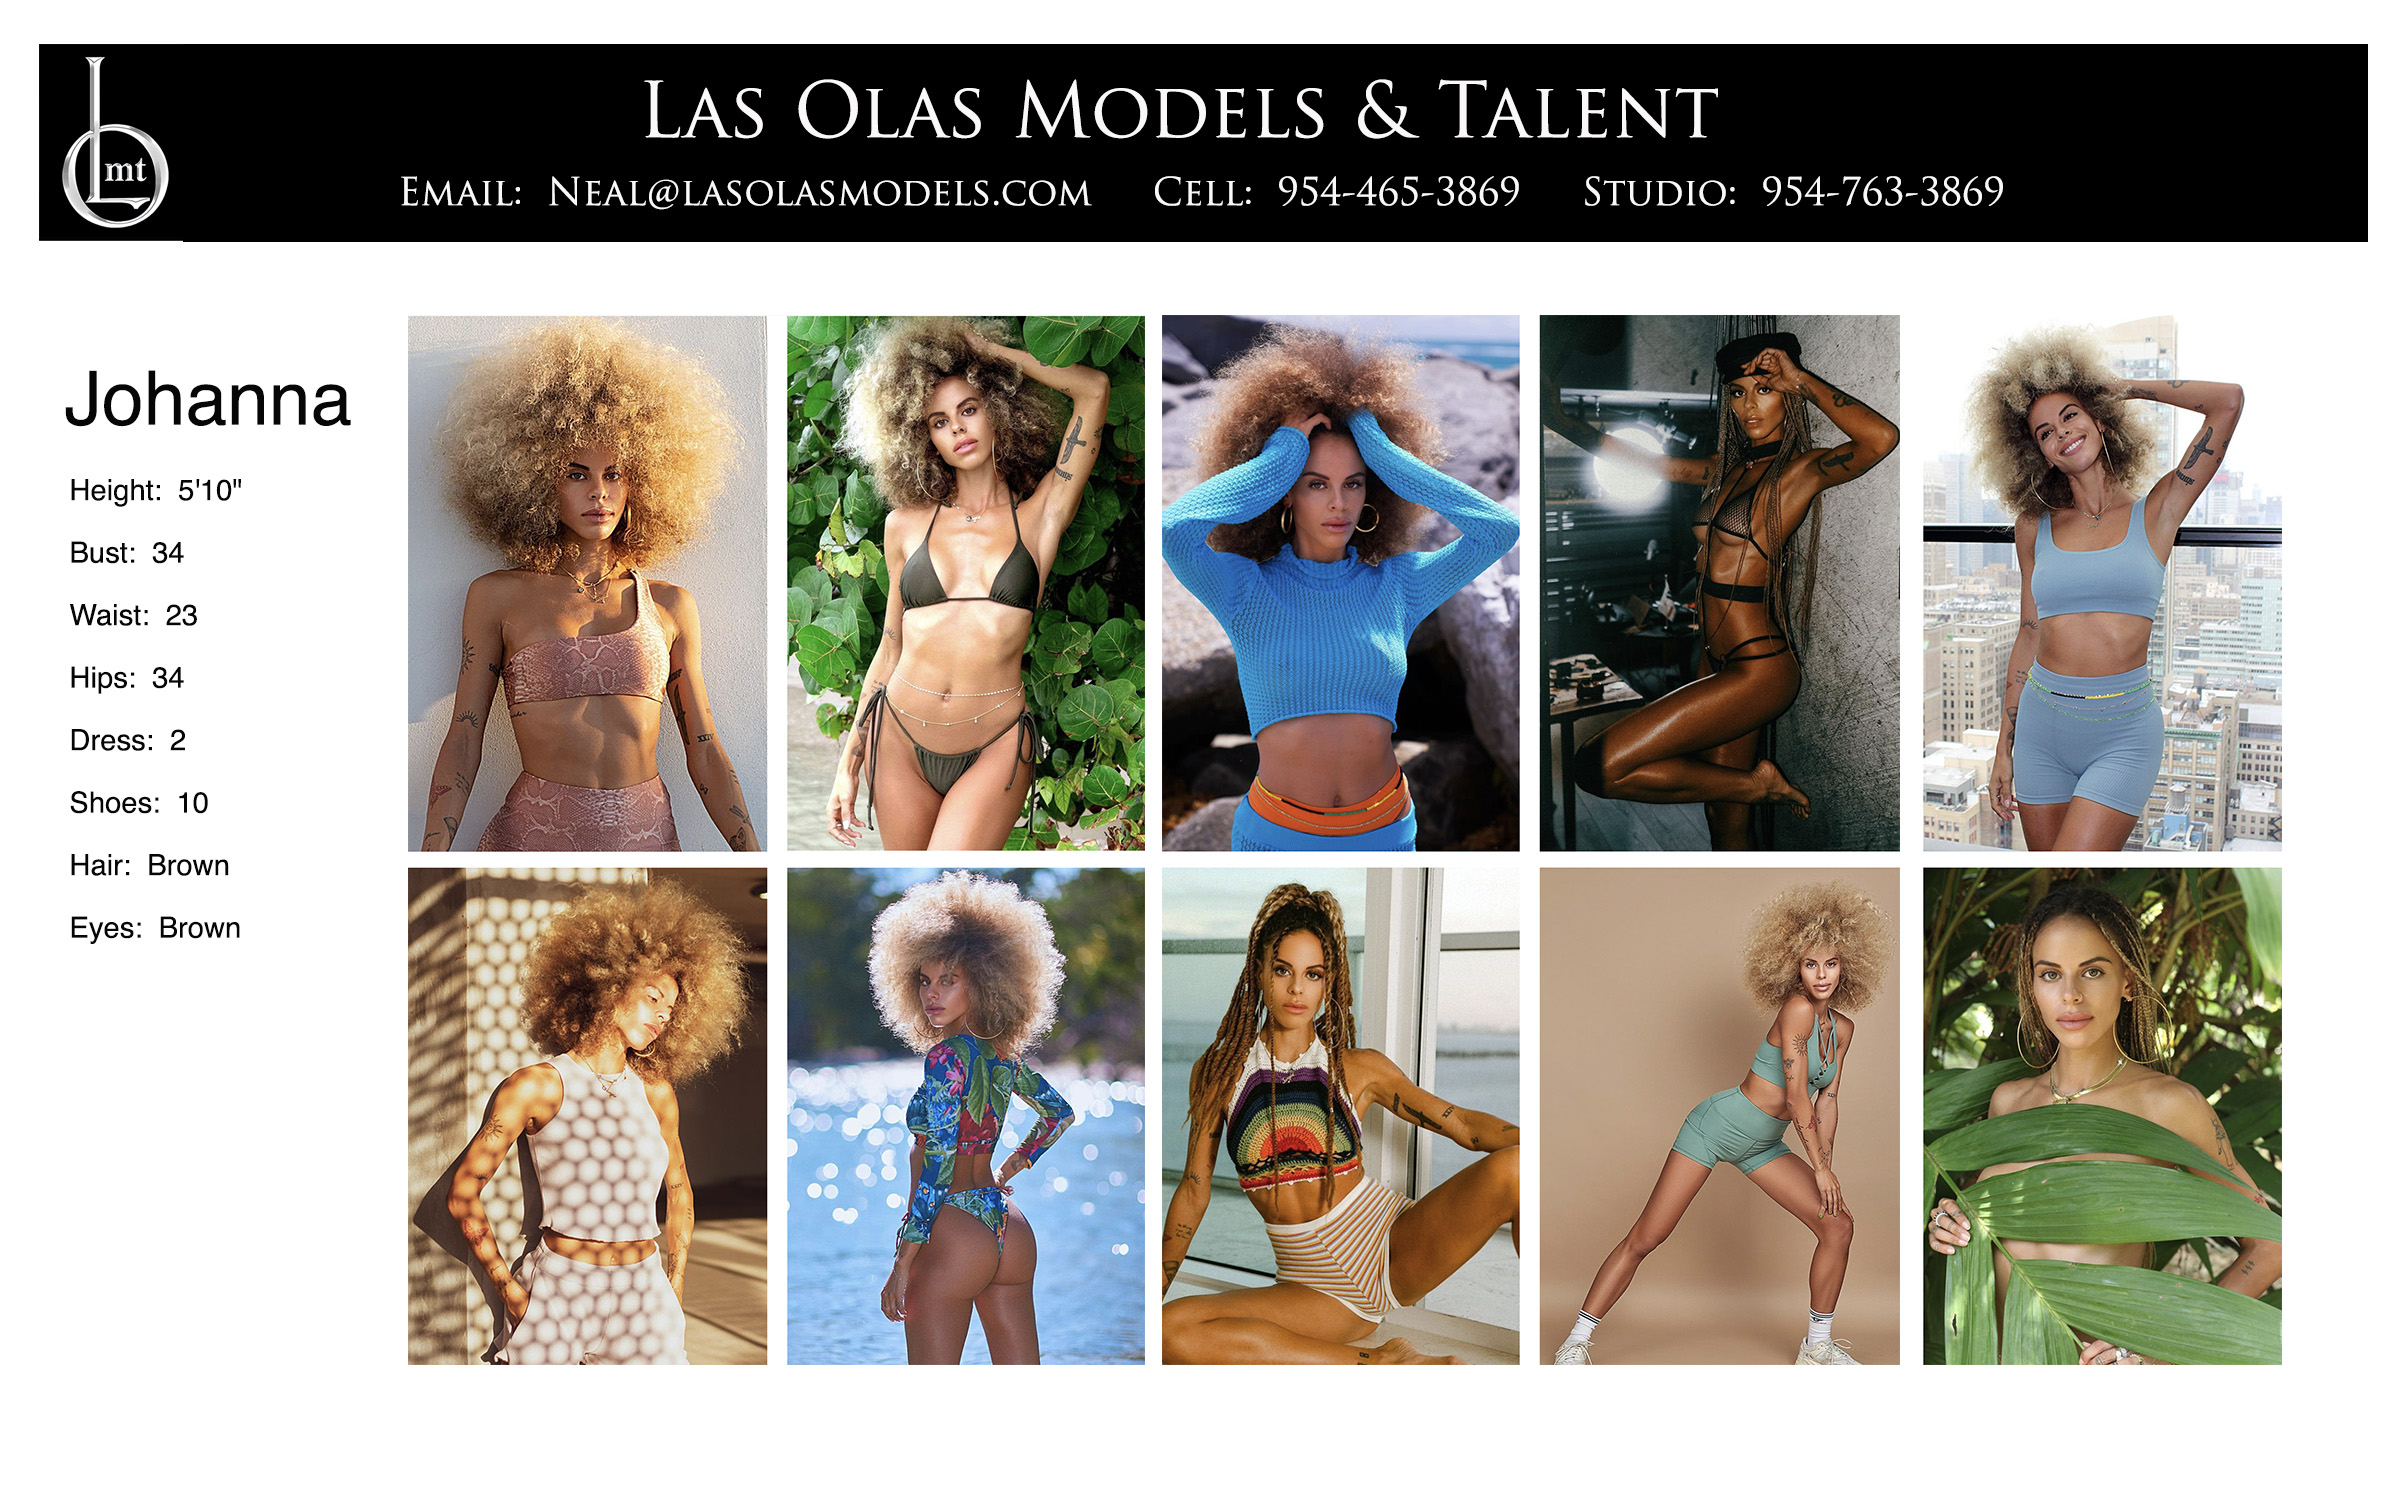 Models Fort Lauderdale Miami South Florida - Print Video Commercial Catalog - Las Olas Models & Talent - Johanna Comp